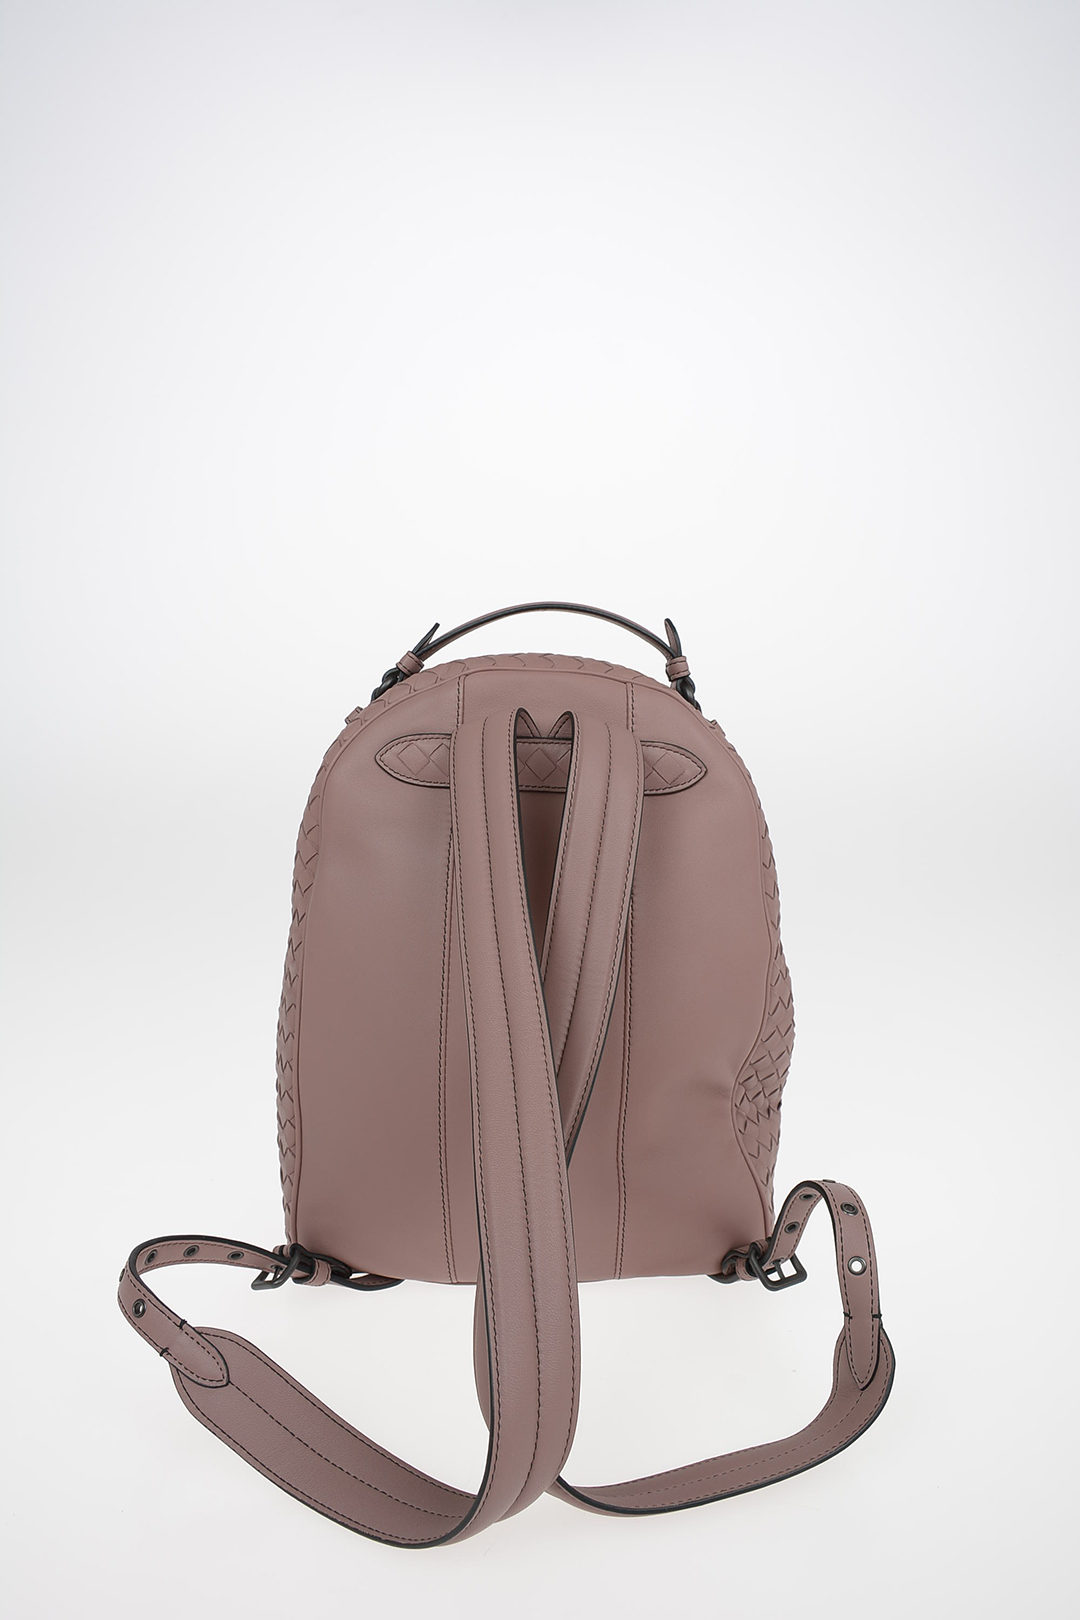 Dark braided leather backpack